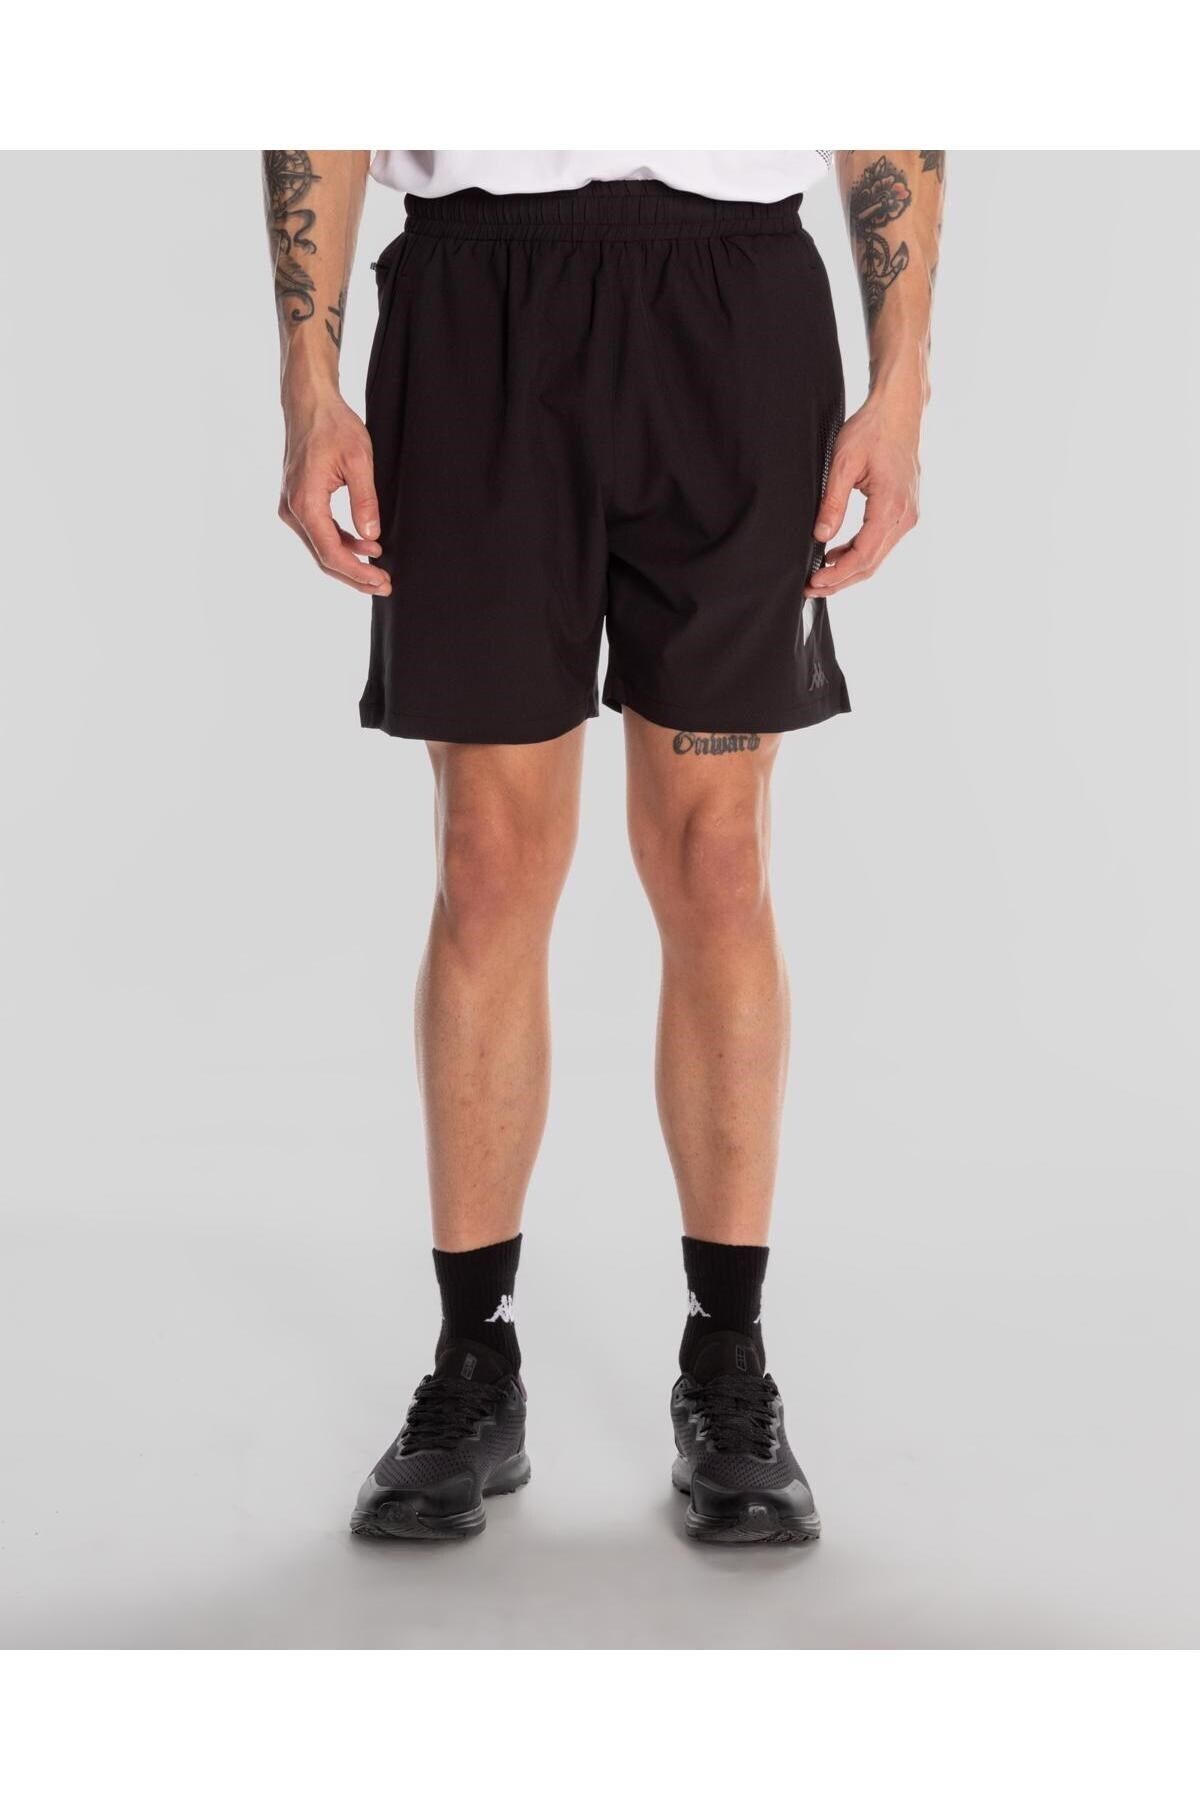 Kappa Man Kombat Vıctor Shorts Black 2/1 Short 341u2dw-005